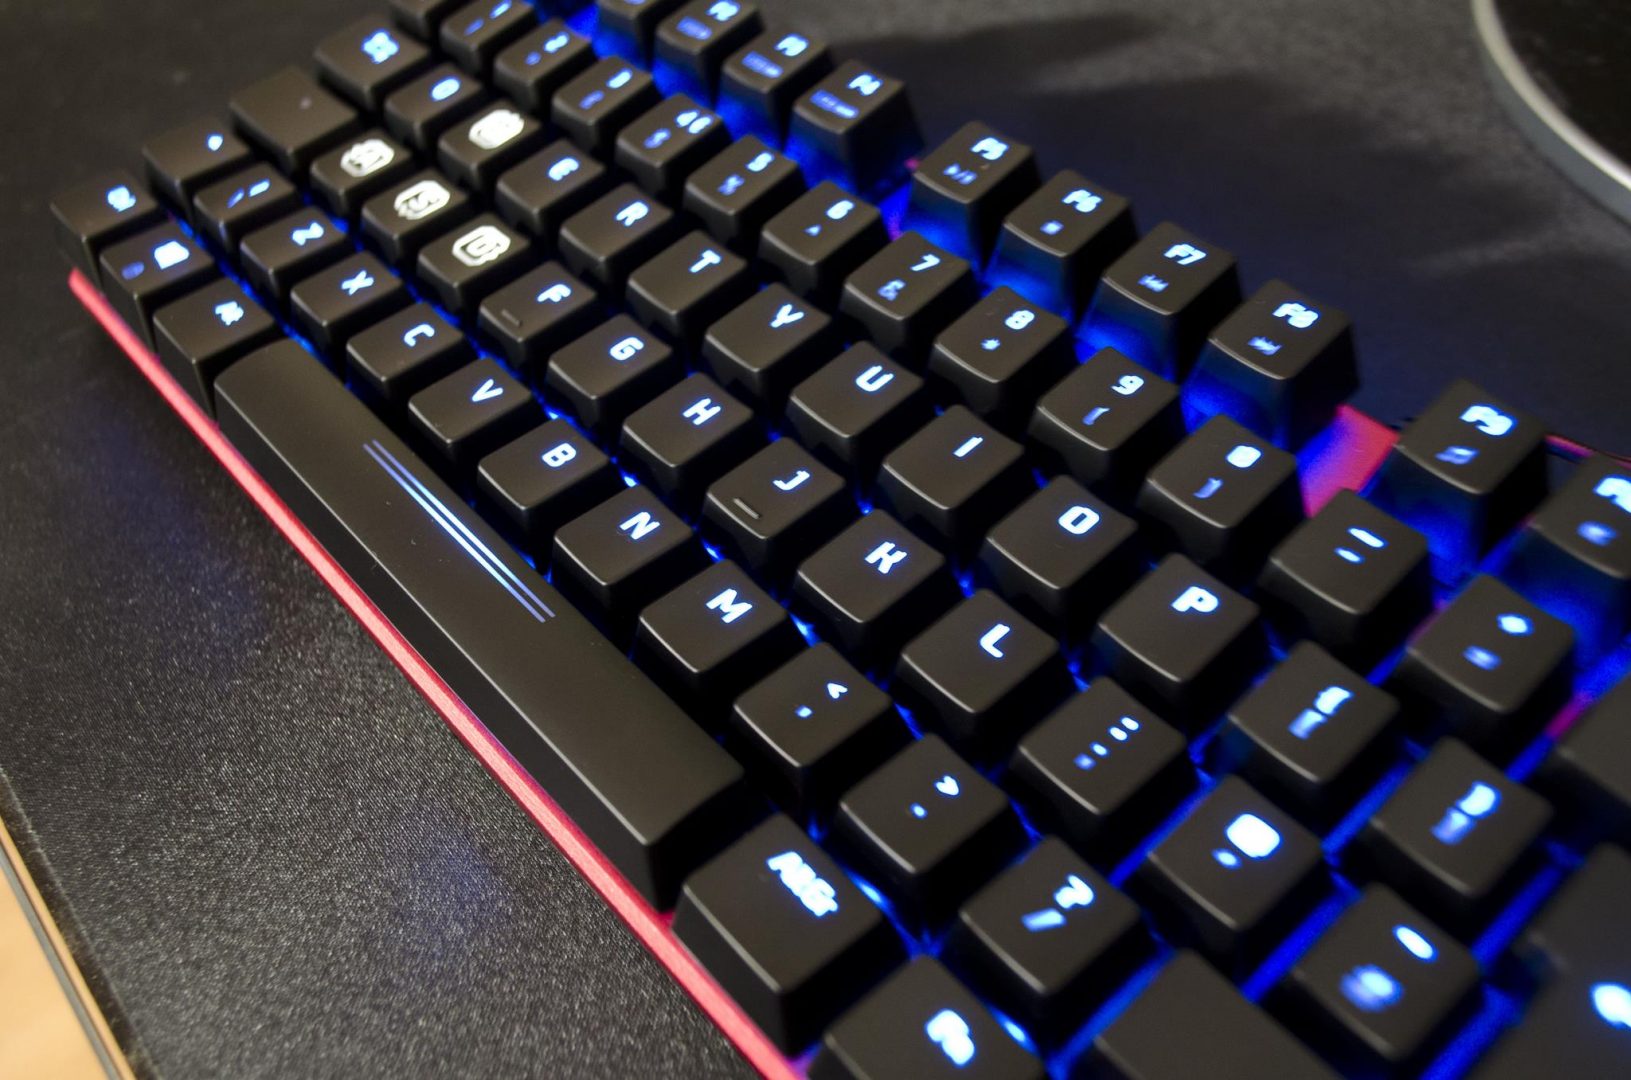 SPEEDLINK ULTOR Illuminated Mechanical Gaming Keyboard Review